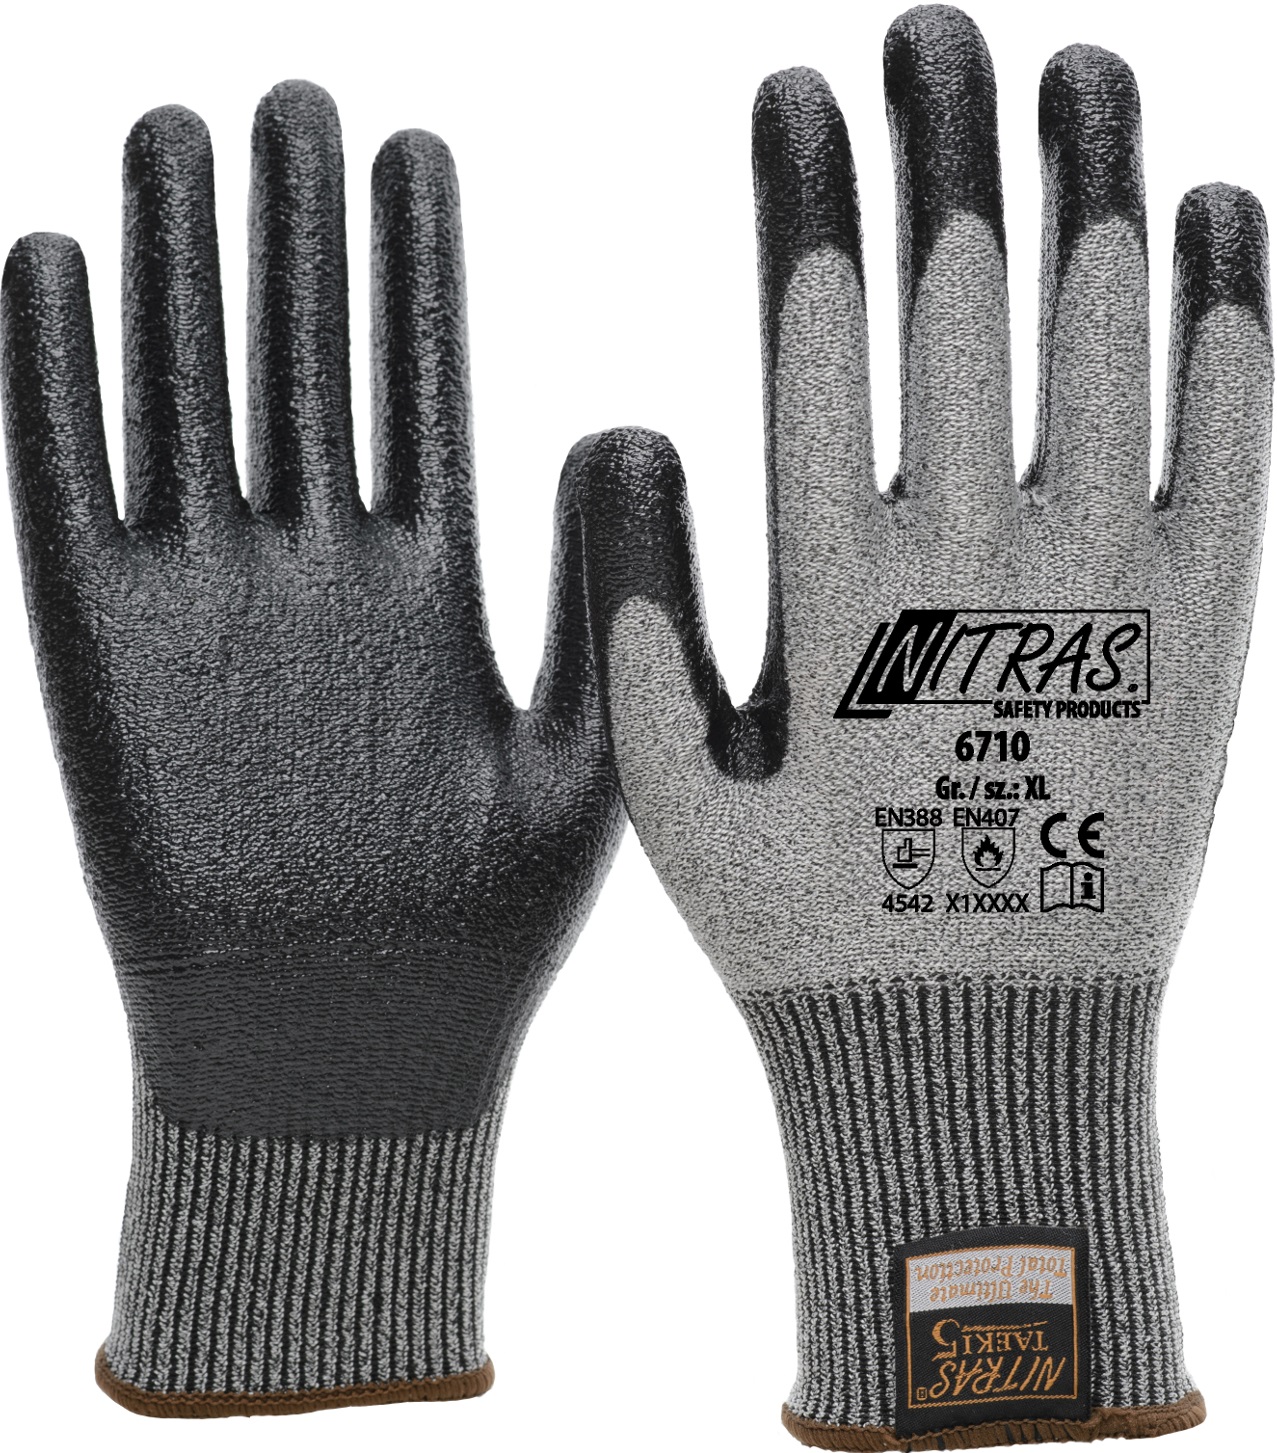 Cut protection gloves, Nitras® TAEKI5® 6710